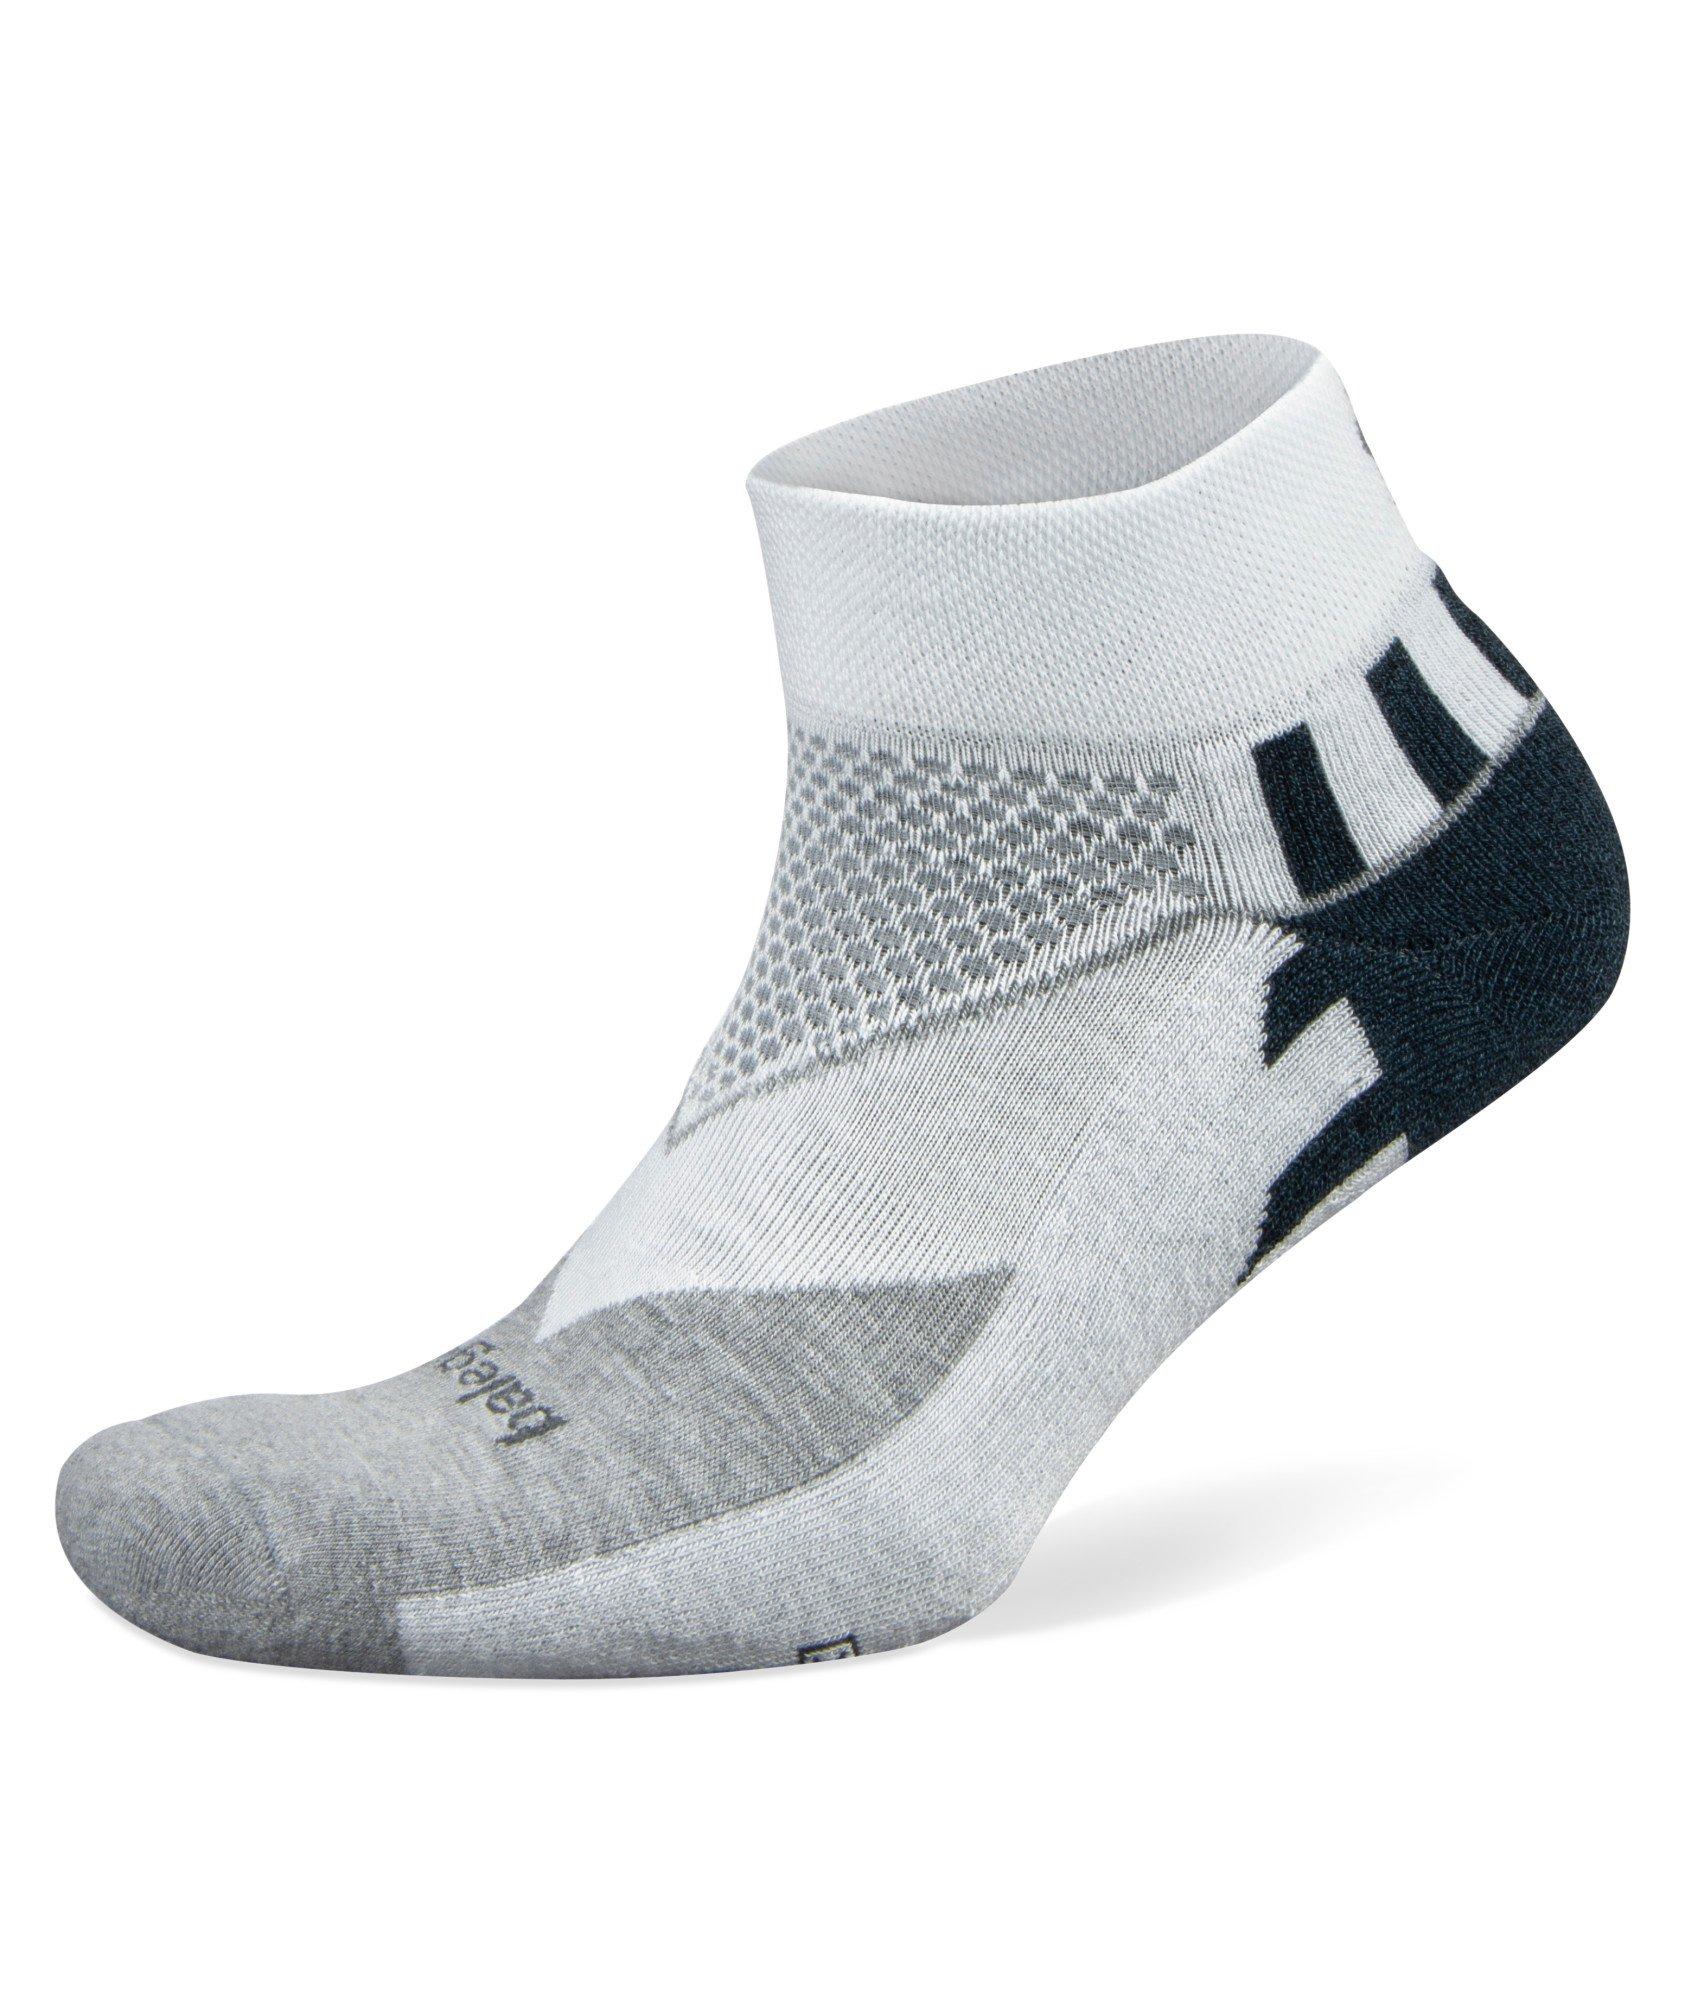 Enduro Low Cut Socks image 0